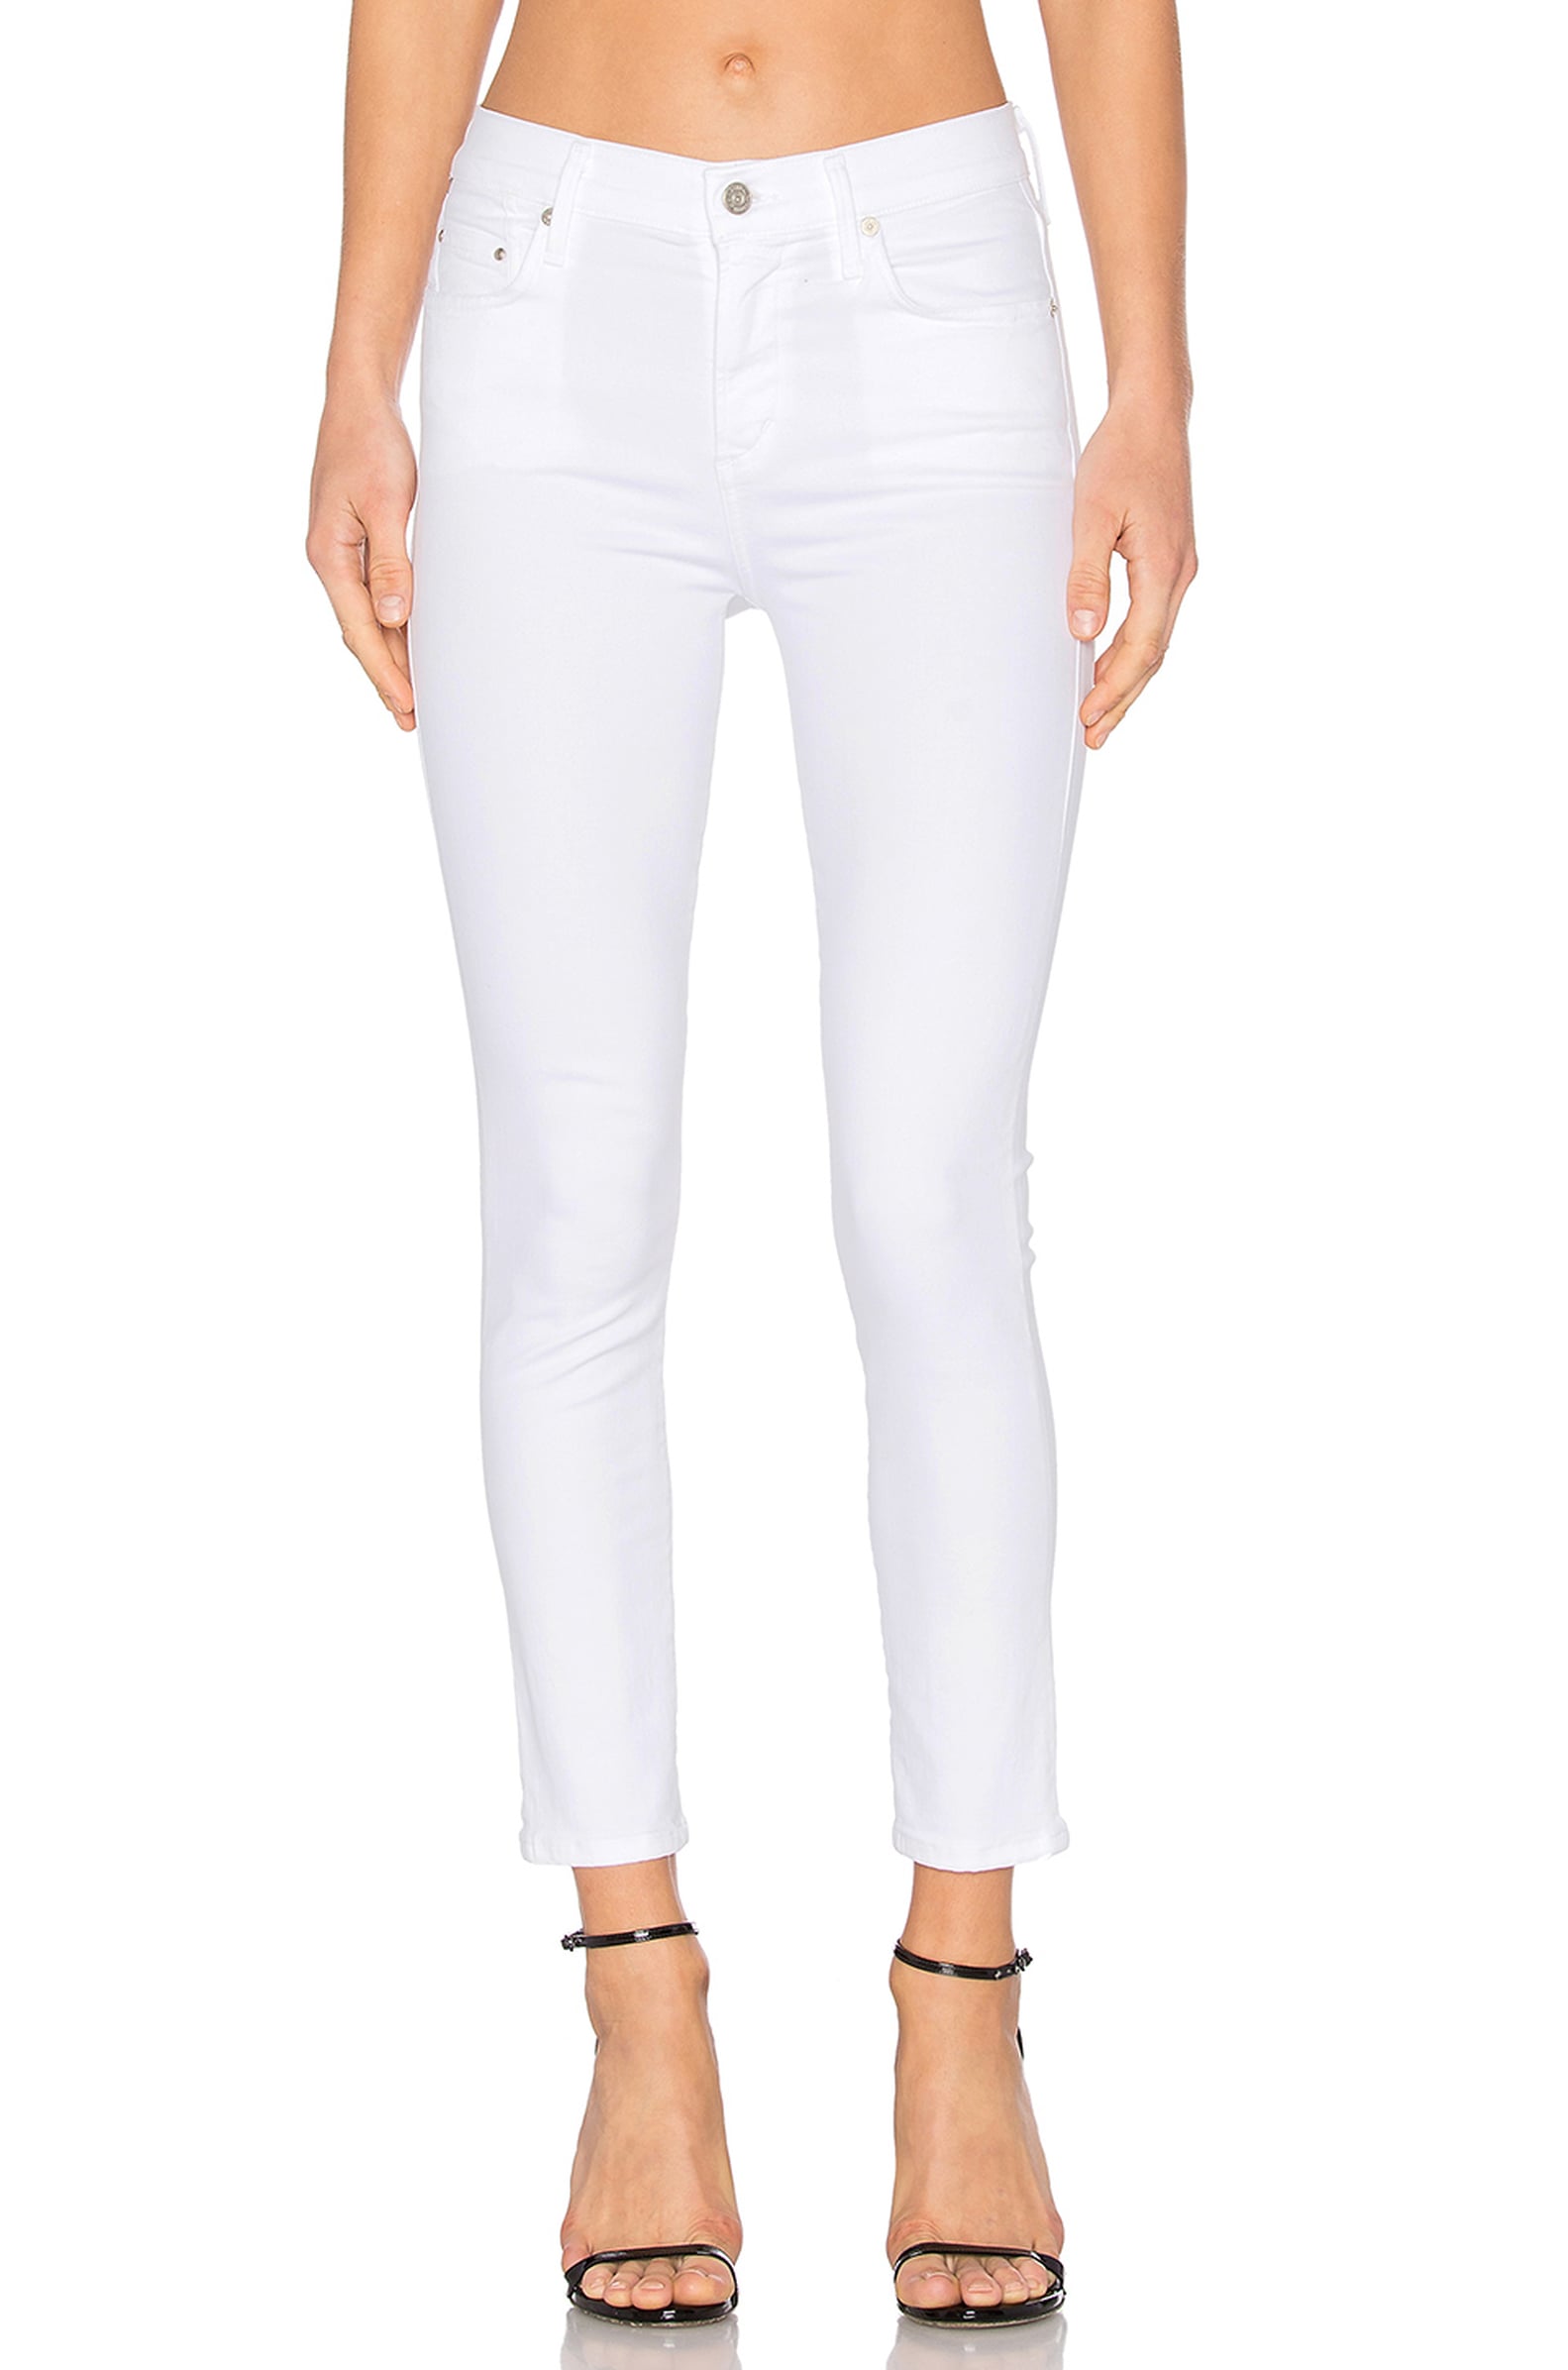 The Best White Jeans 2017 | POPSUGAR Fashion